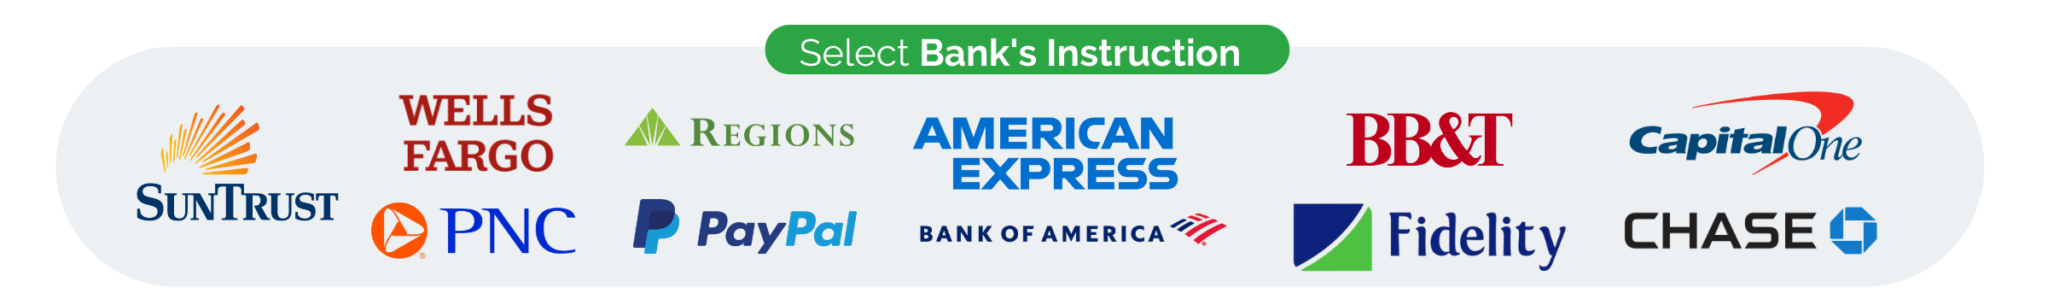 banks-of-america-amex-wells frago-american express